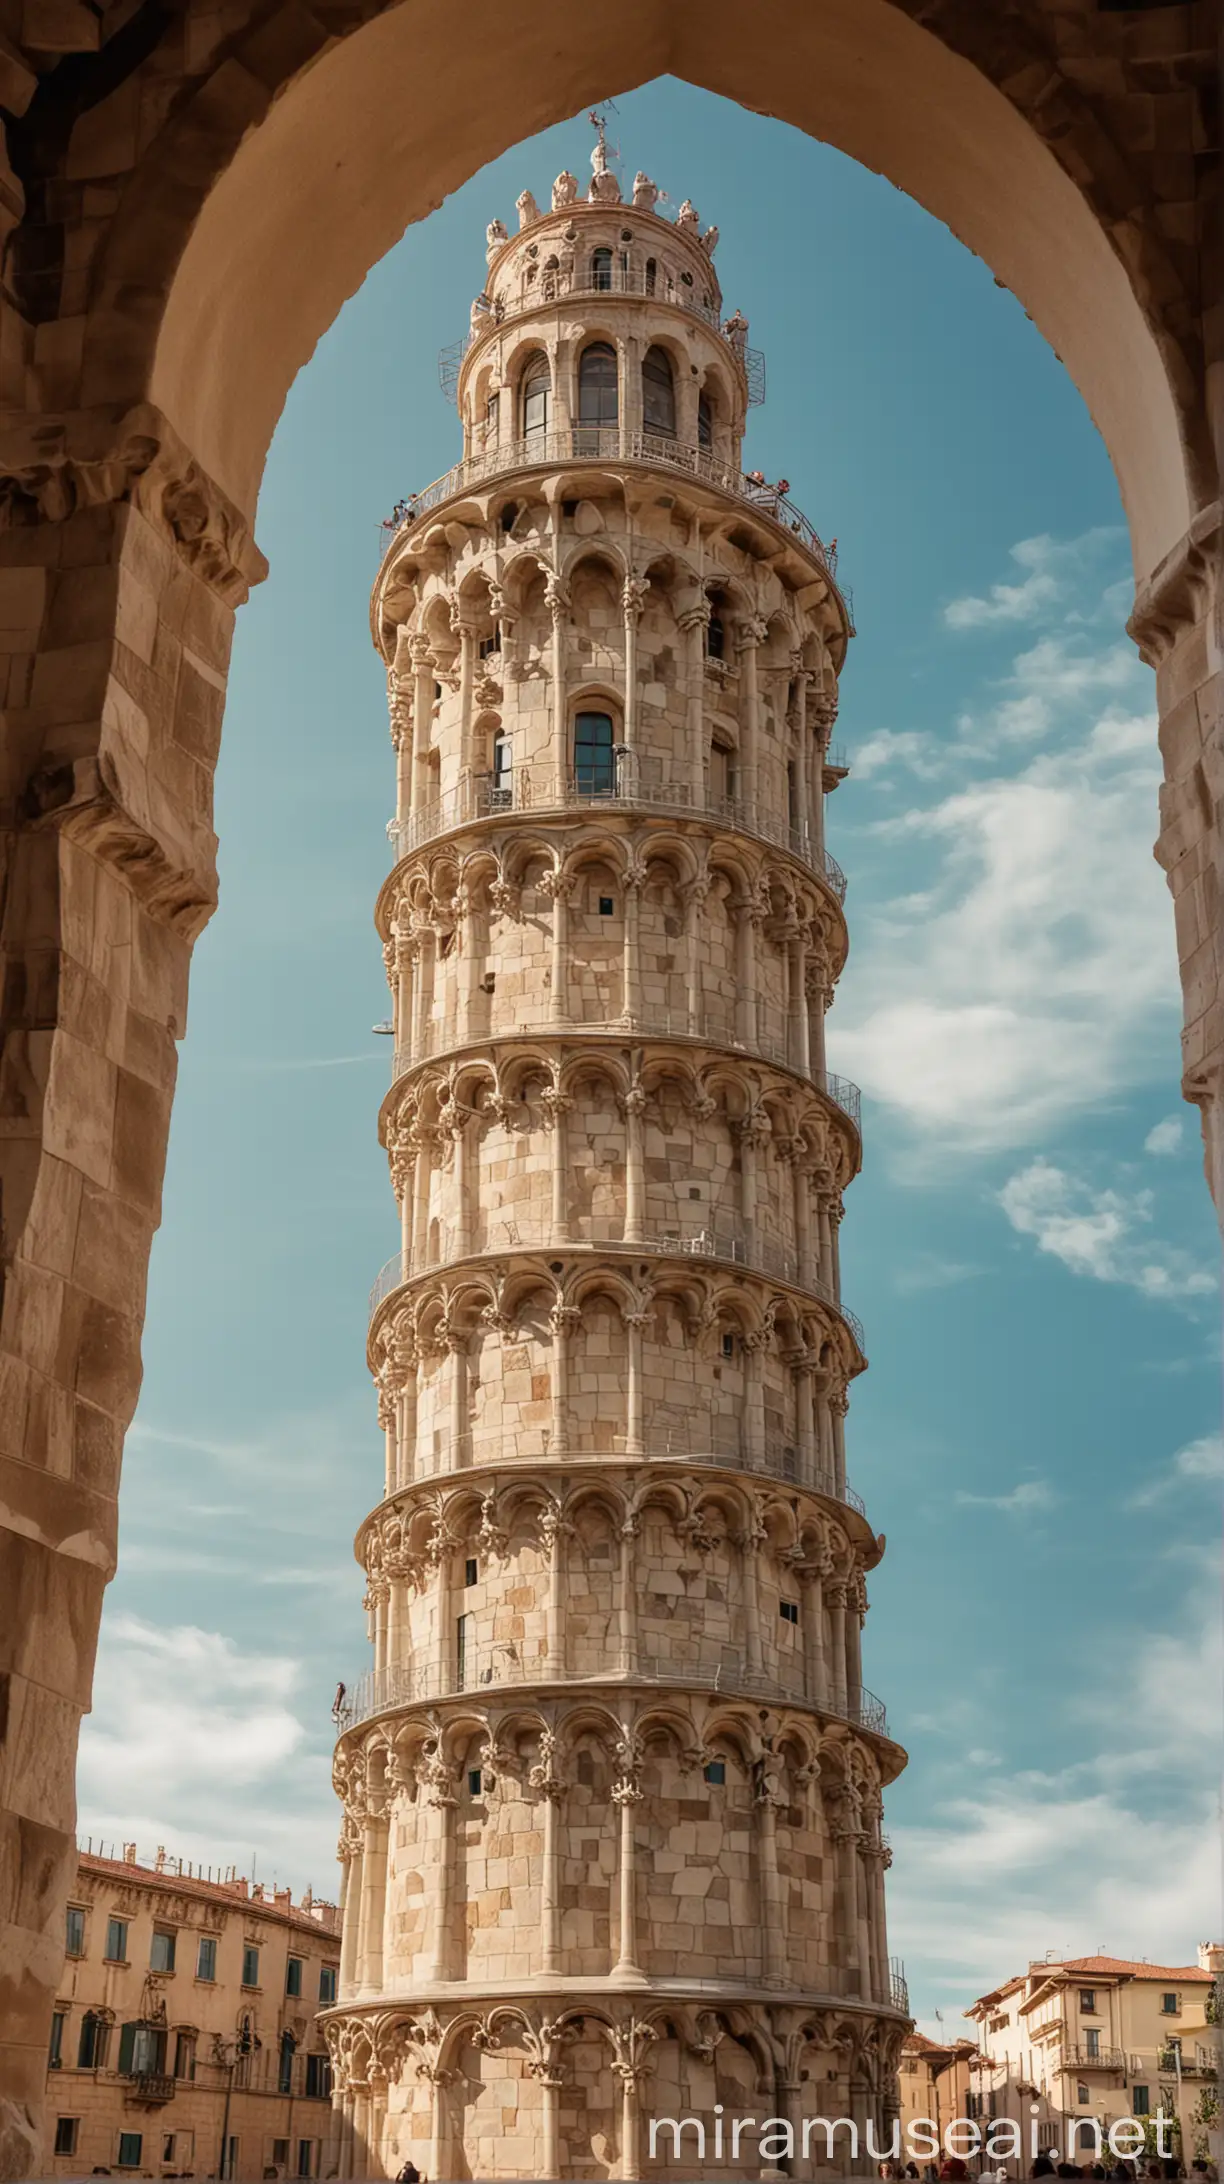 Gaudiinspired Tower of Pisa Vibrant Interpretation of Iconic Architecture